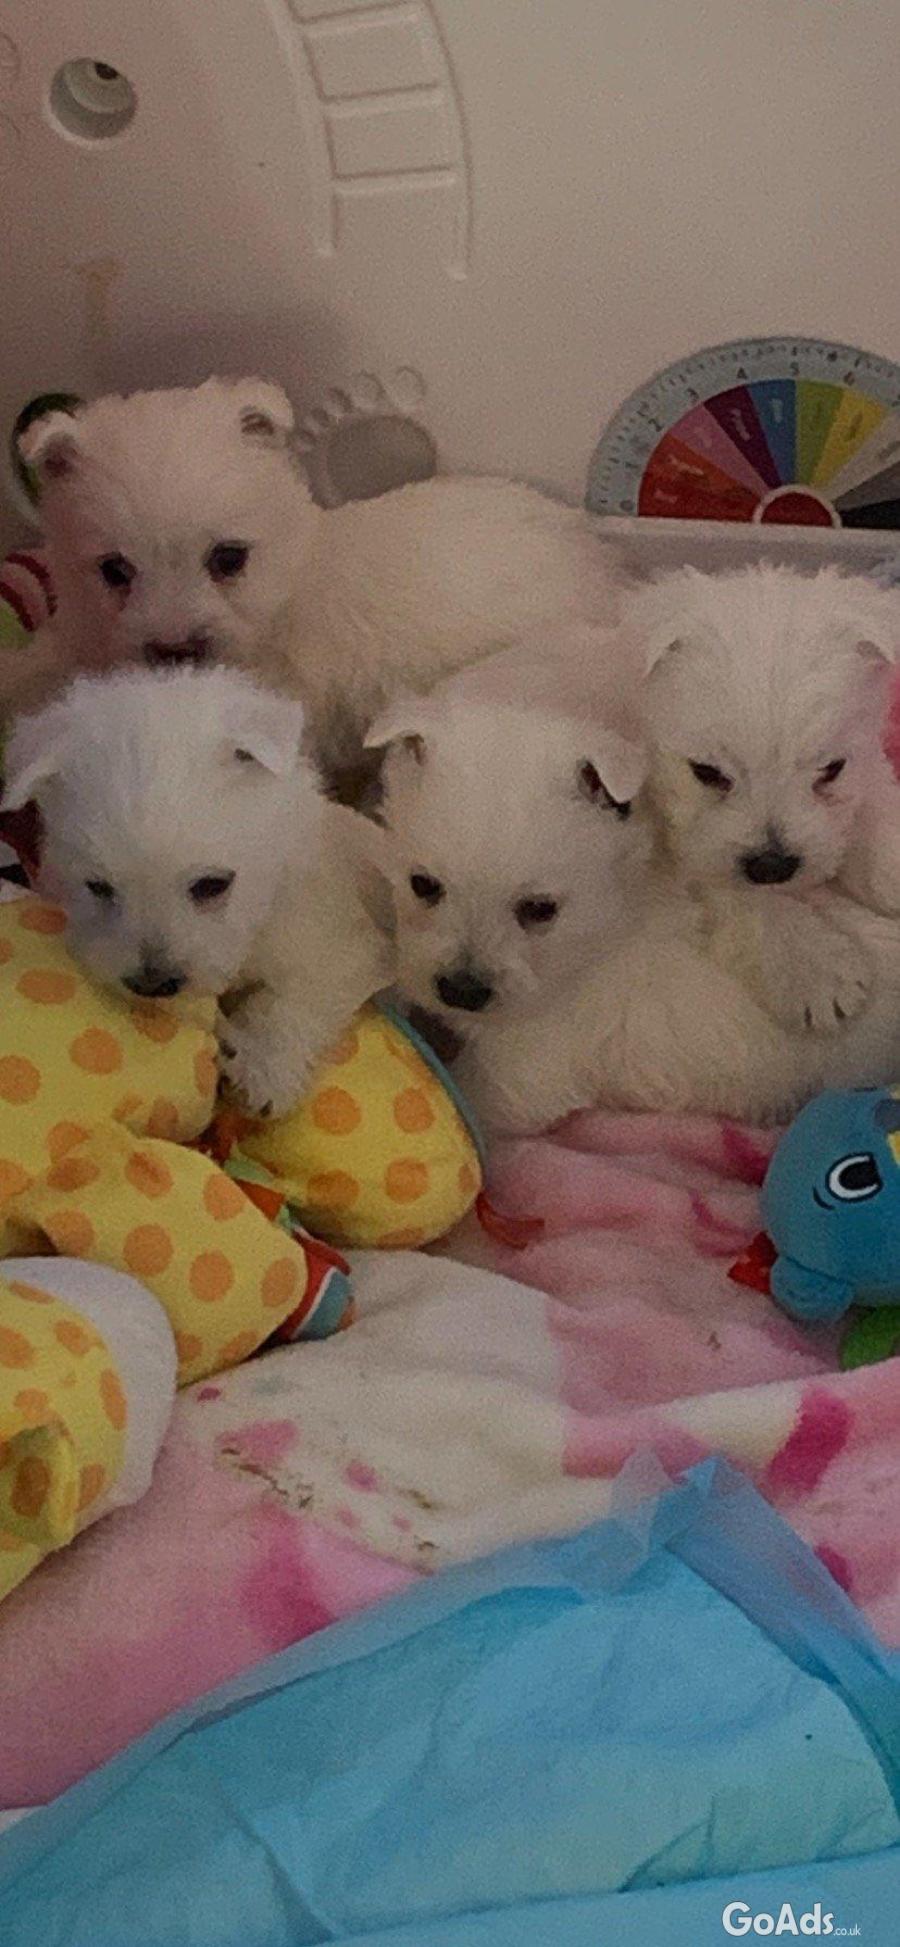 Snow Wite West Highland White Terrier Puppies.